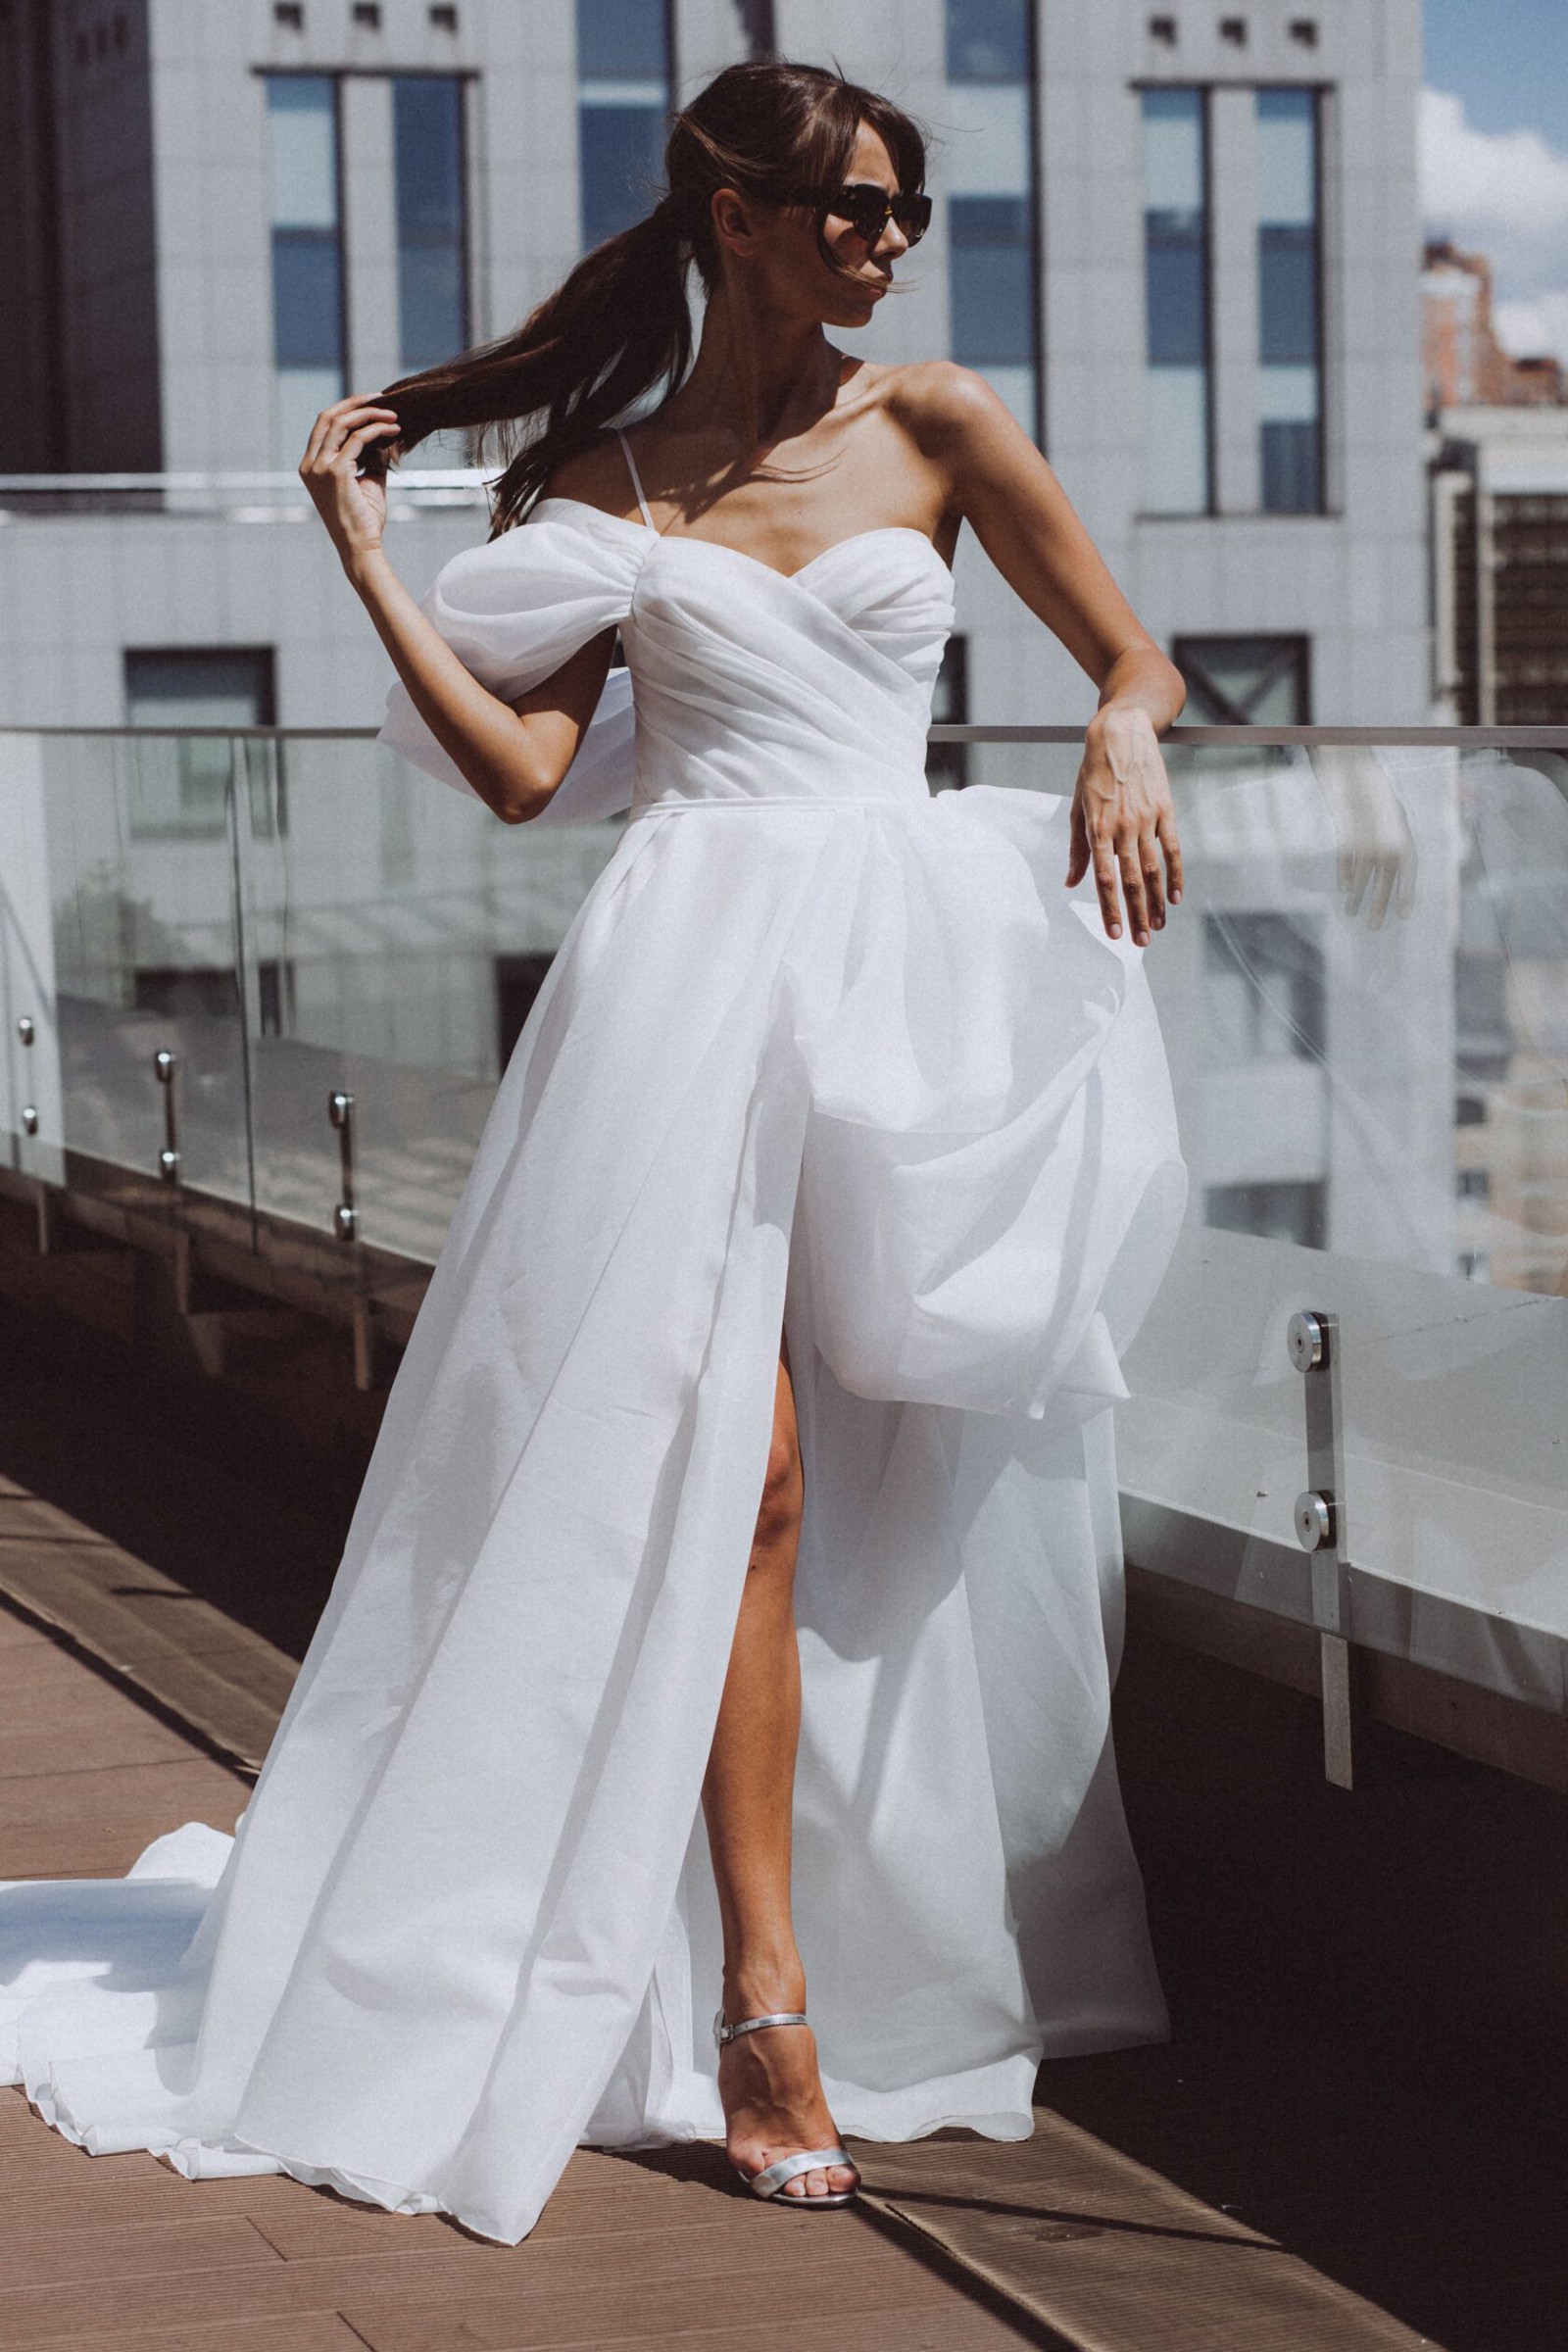 R Gennemsigtig Forkorte Esty Style Daniella Sample Wedding Dress Save 65% - Stillwhite